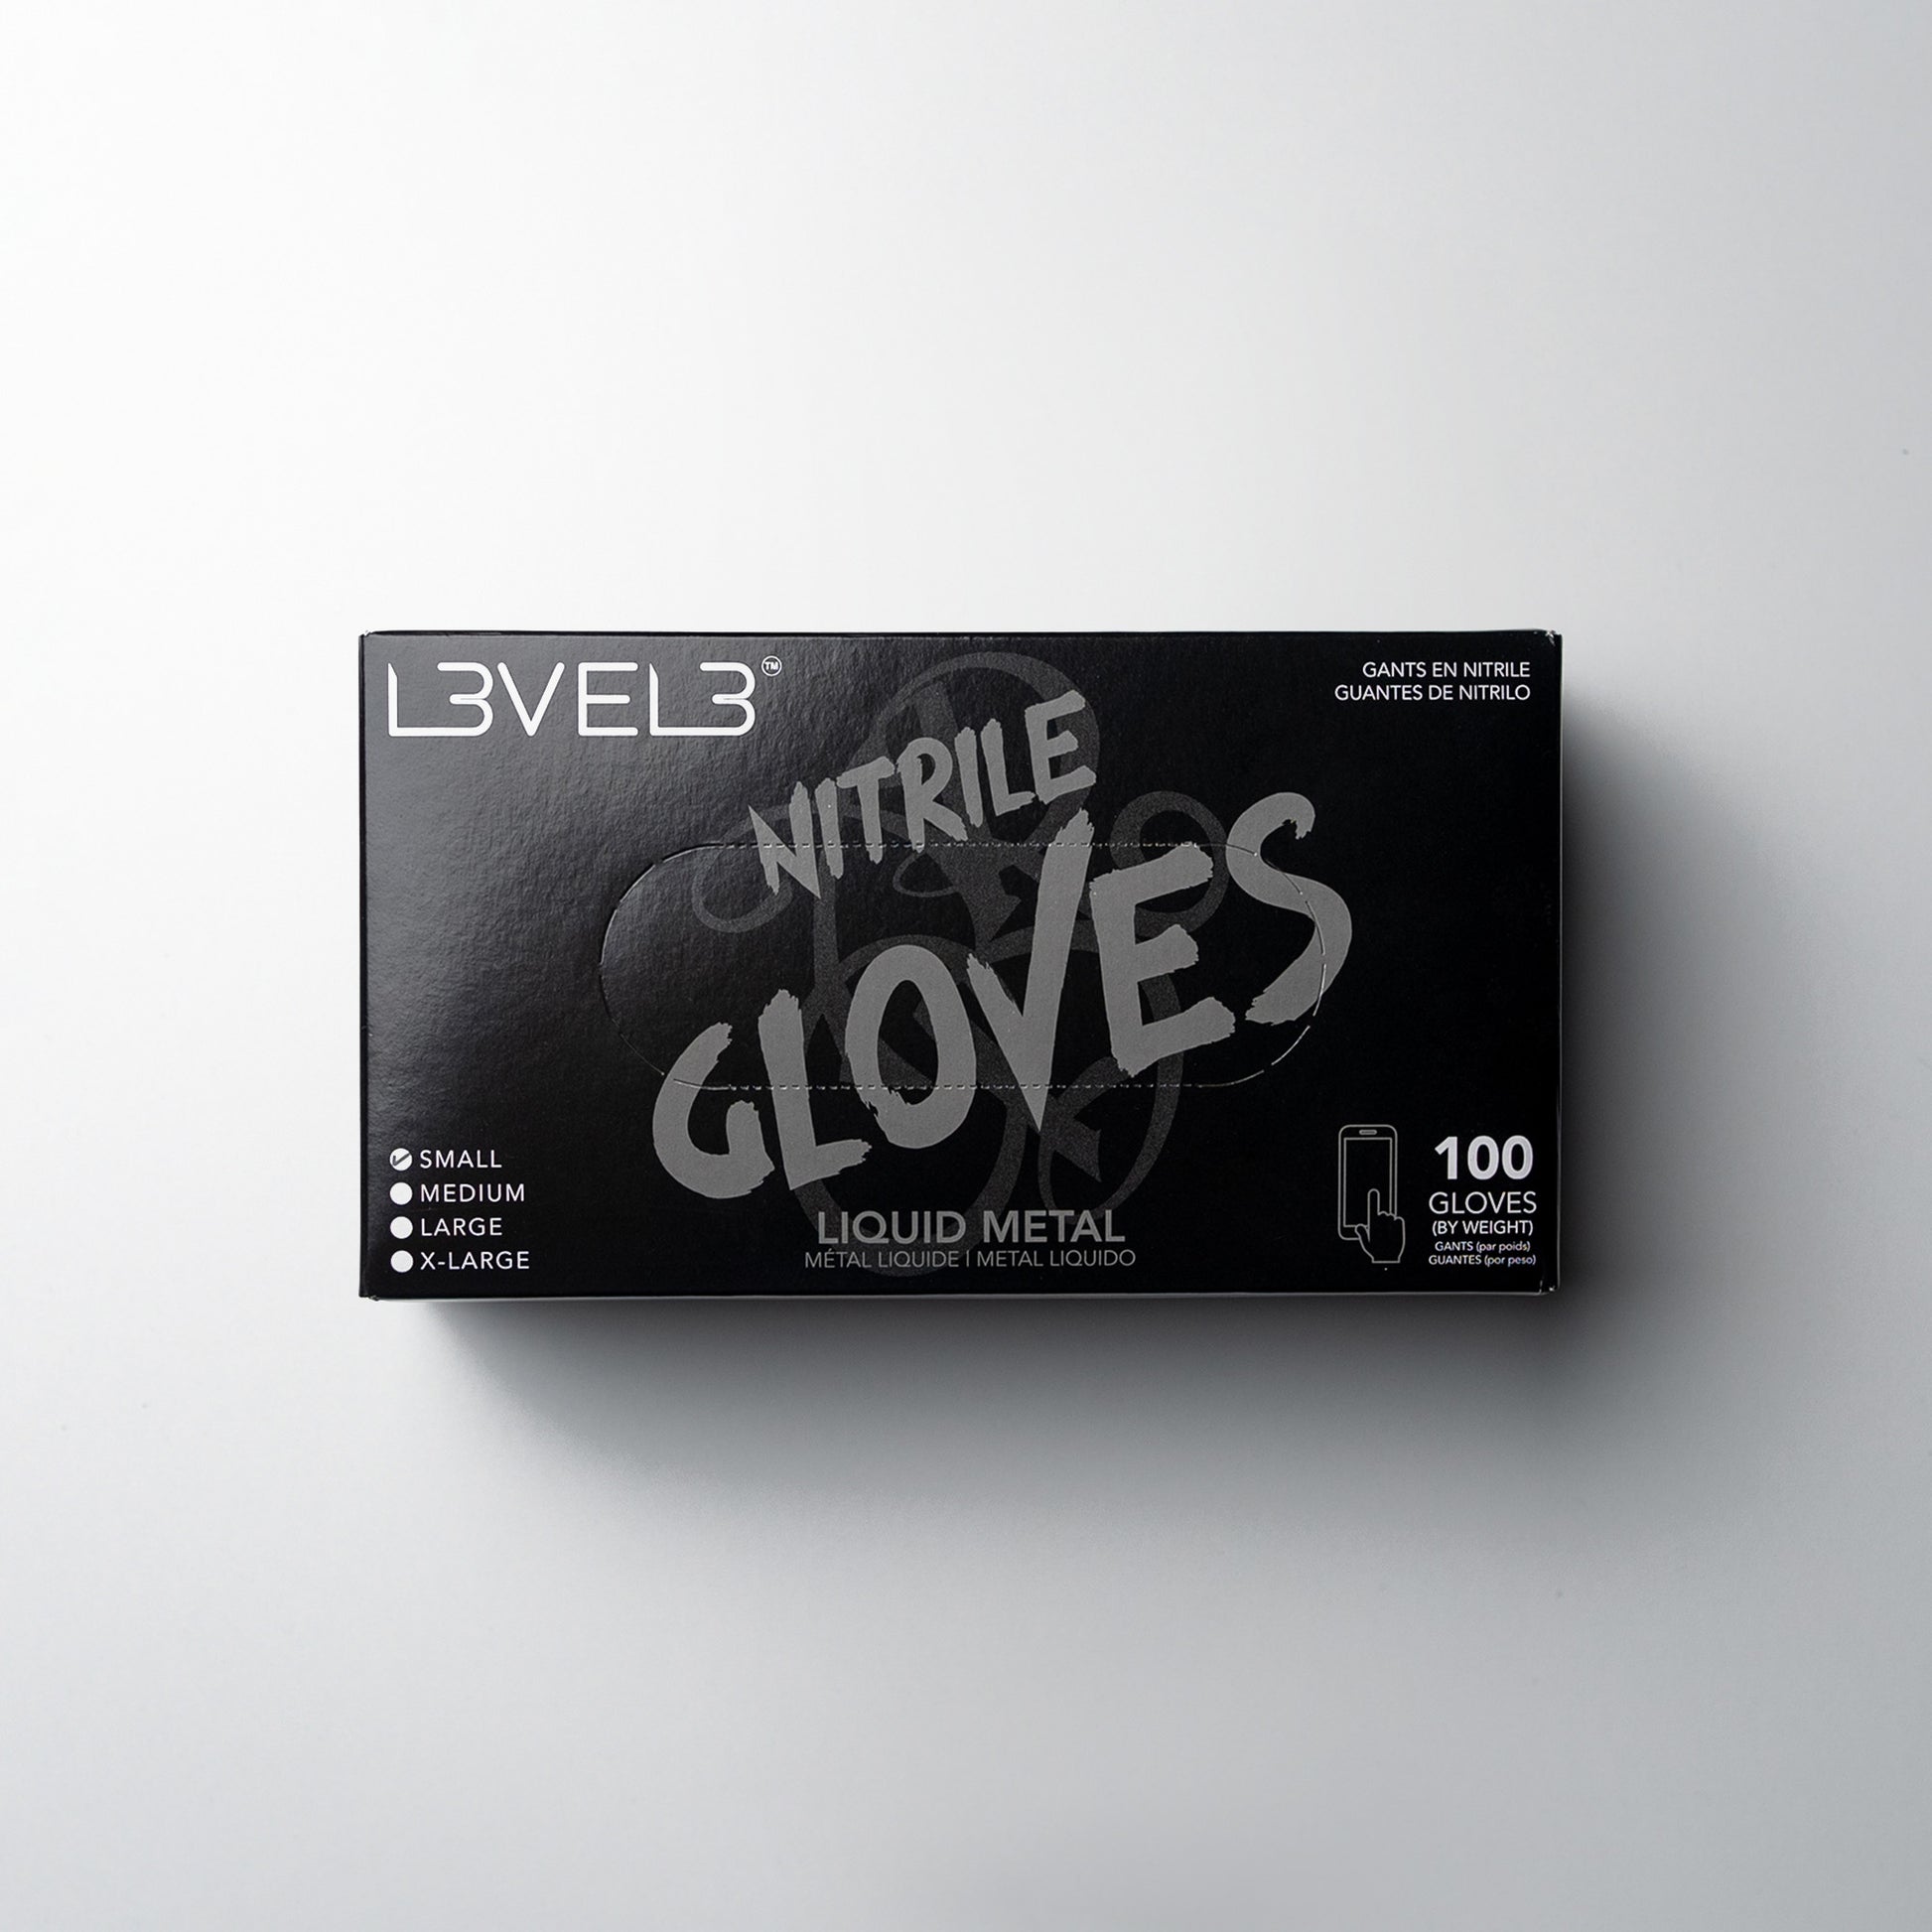 Level 3 Nitrile Gloves Liquid Metal